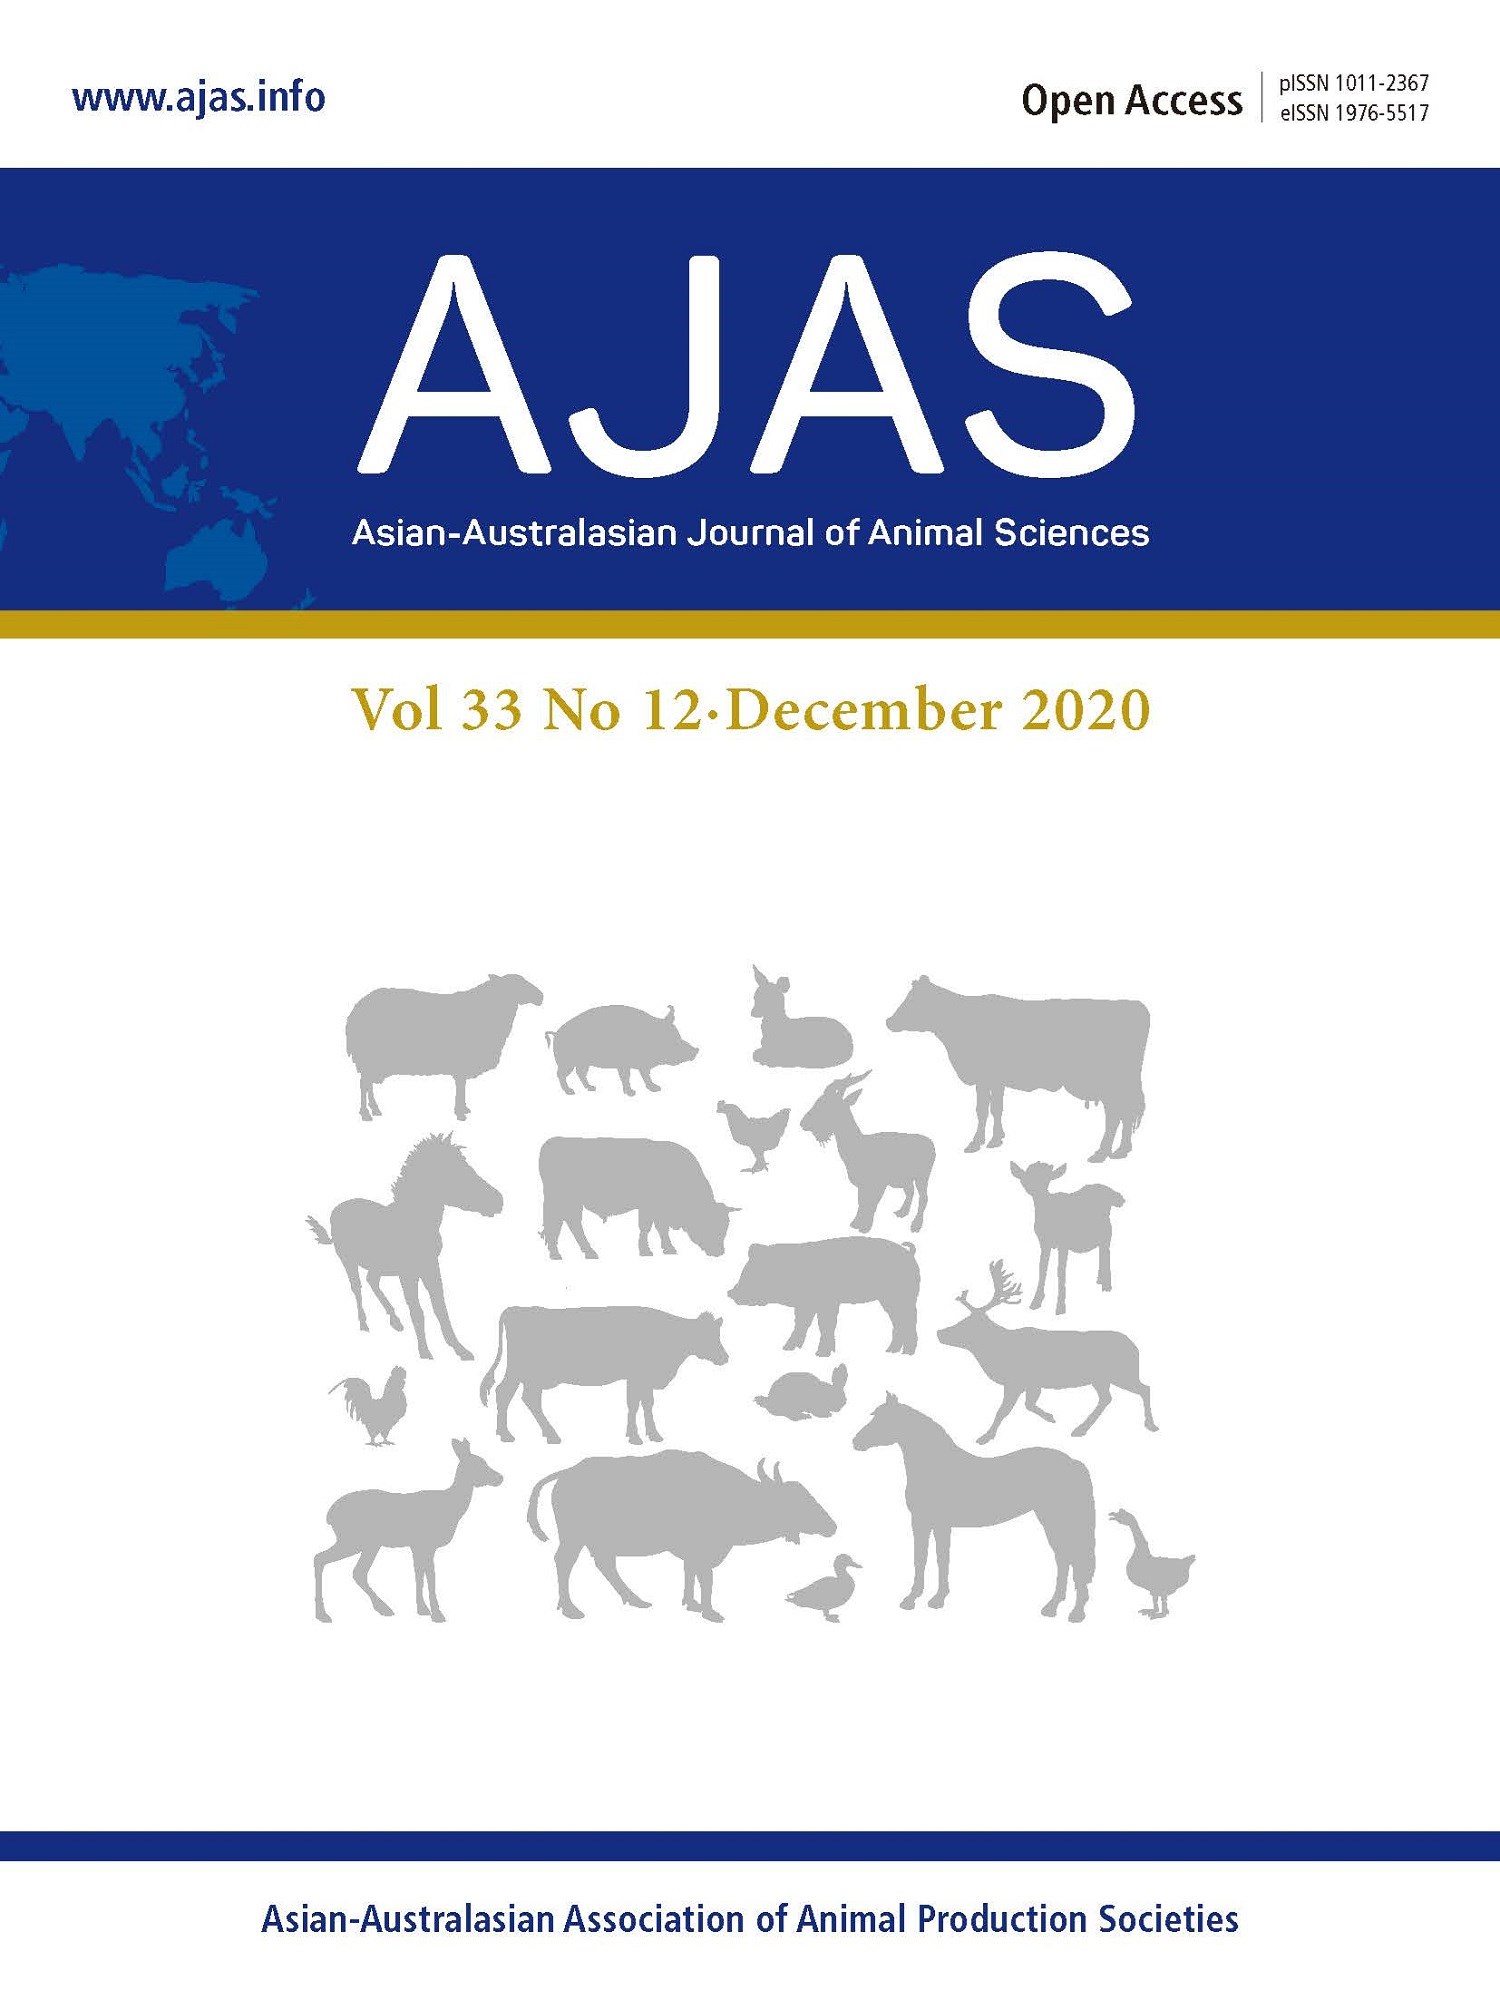 Asian-Australasian Journal of Animal Sciences